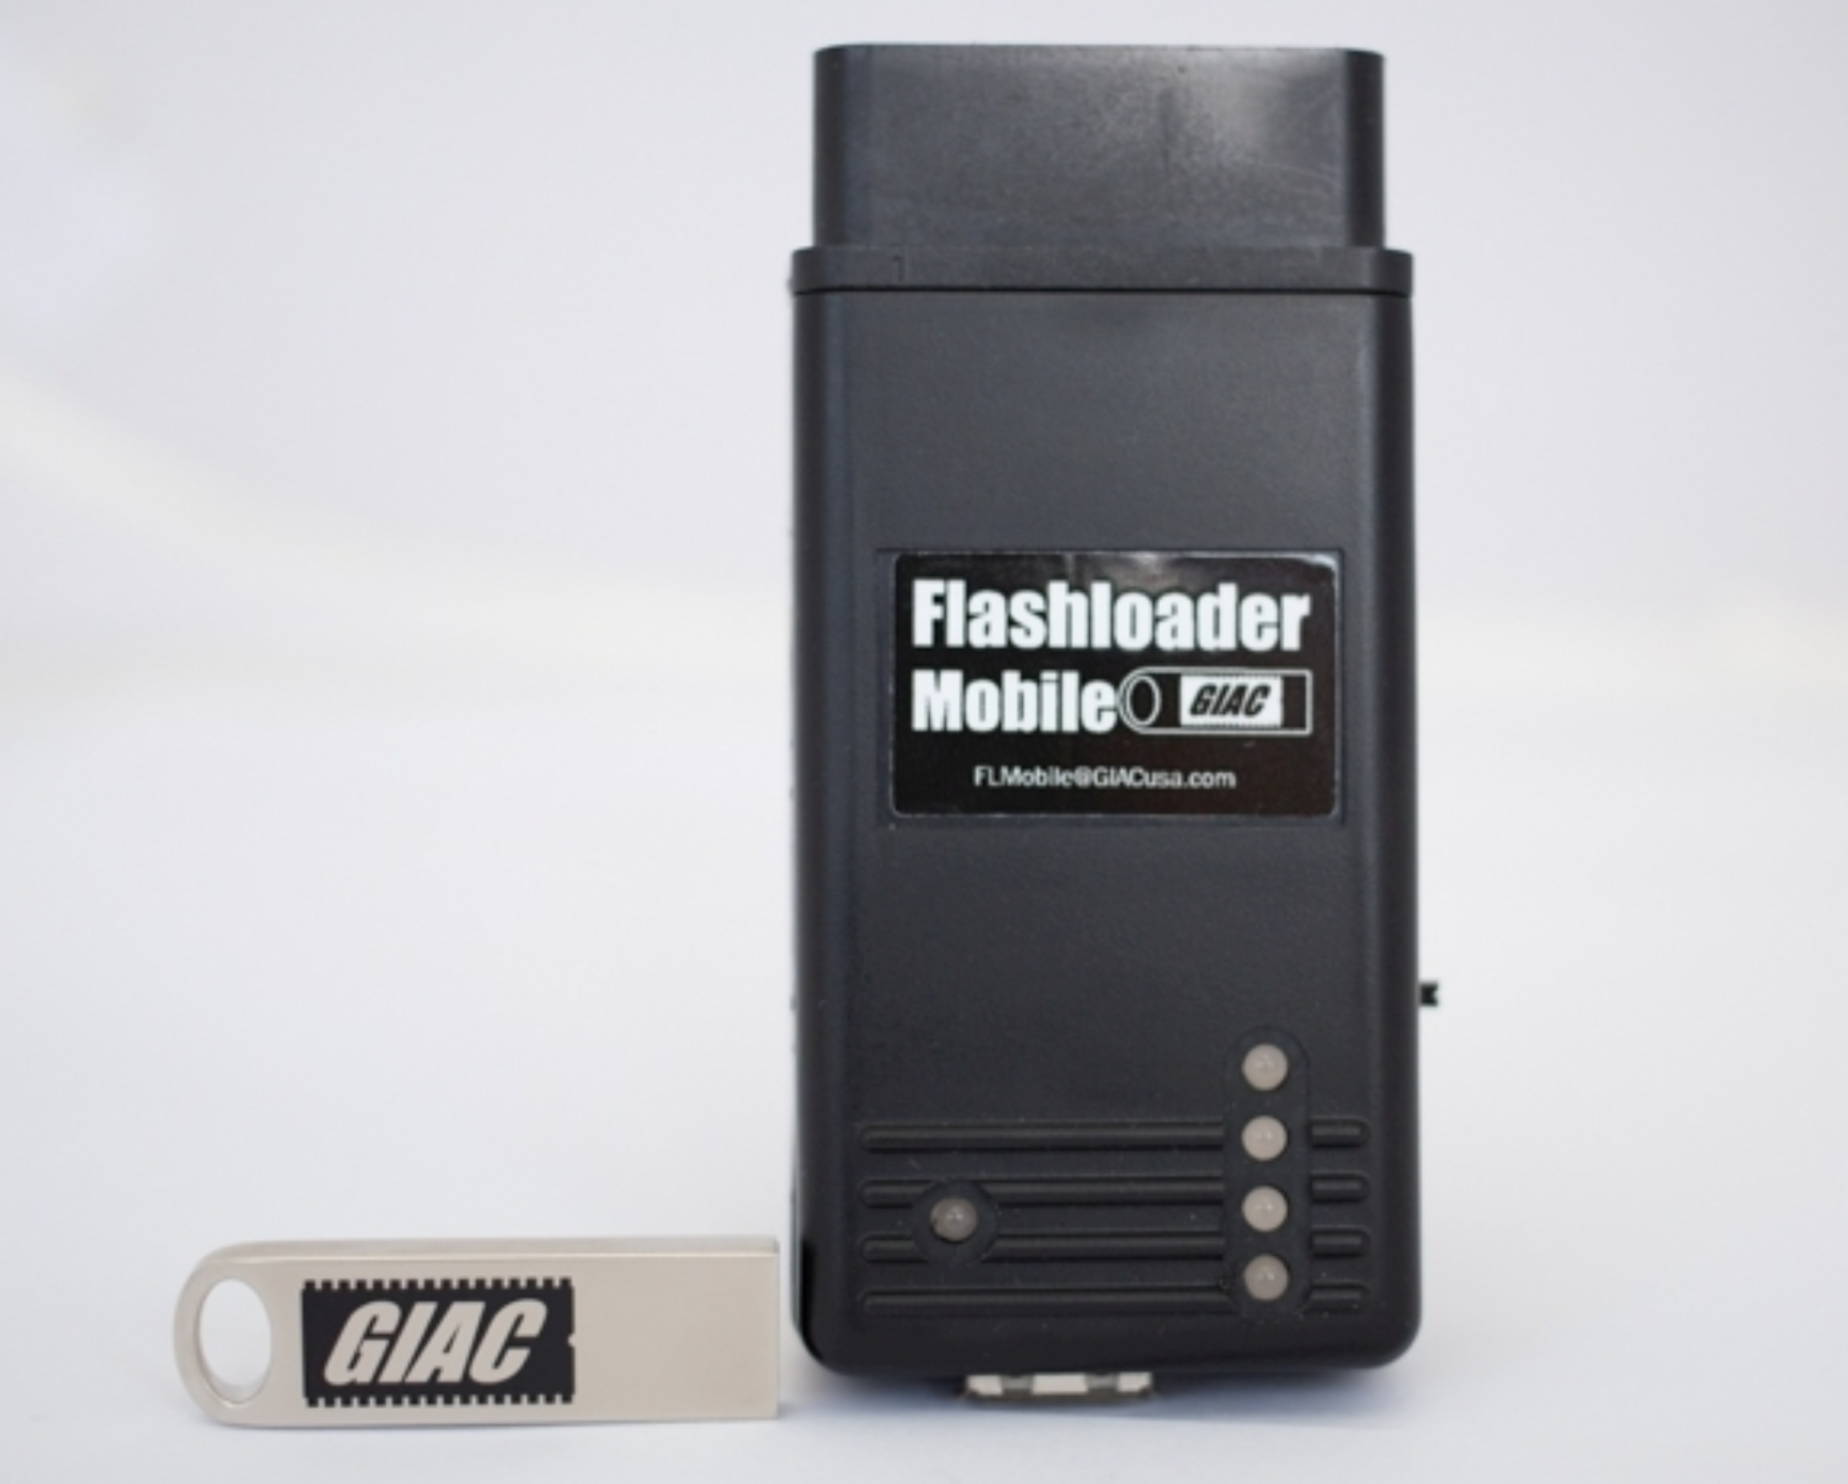 giac flashloader mobile